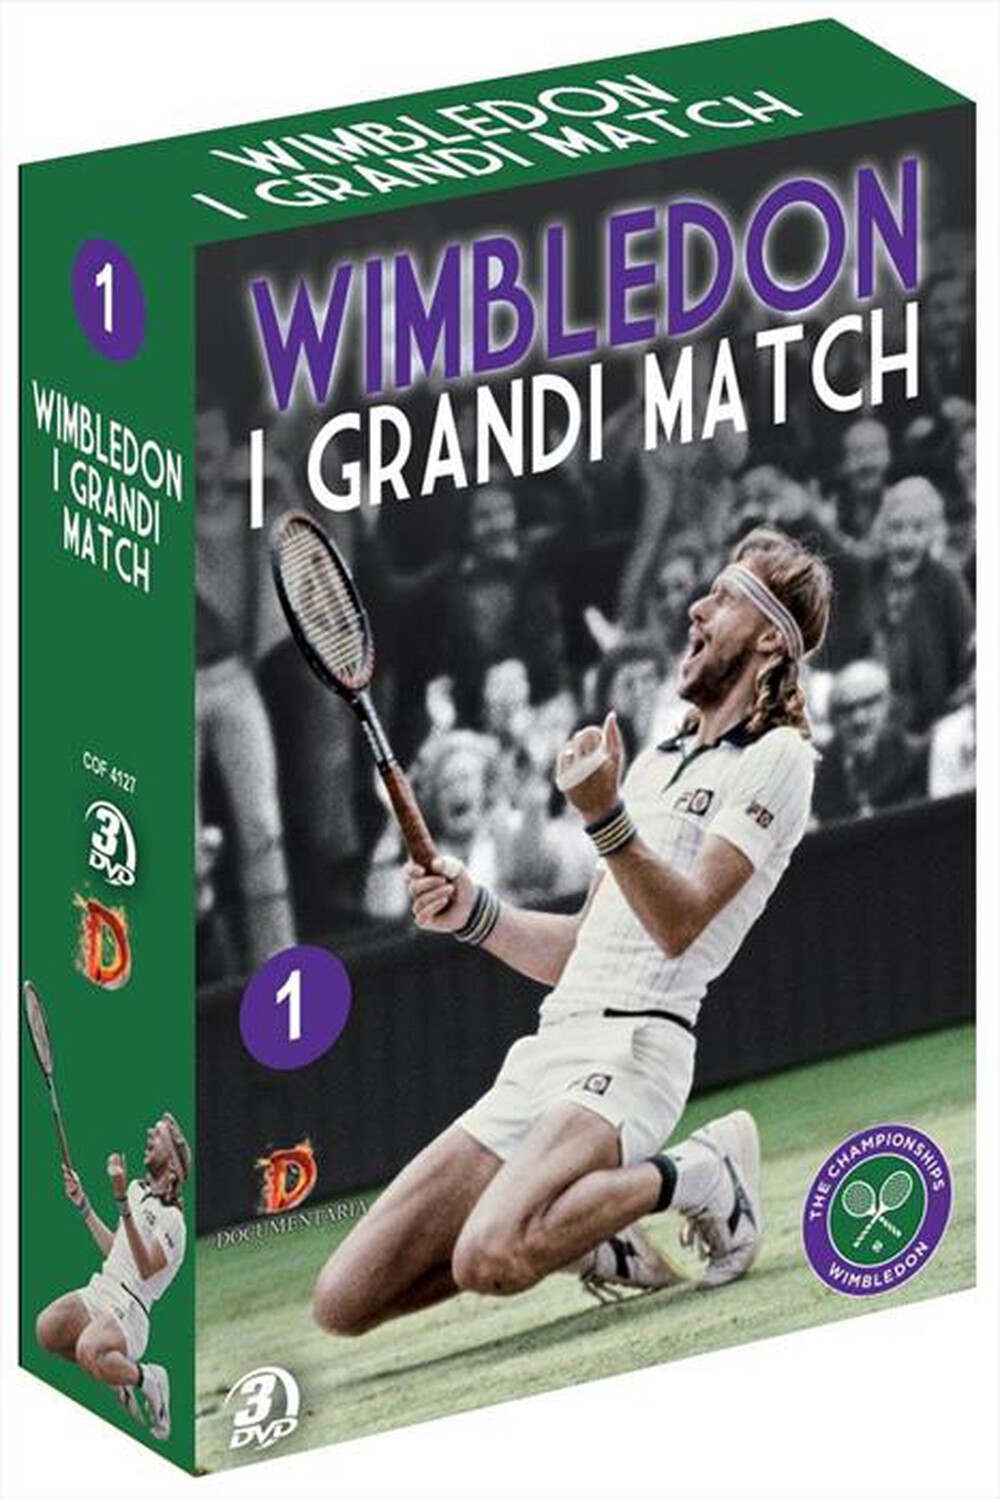 "CINEHOLLYWOOD - Wimbledon - I Grandi Match 1 (3 Dvd)"